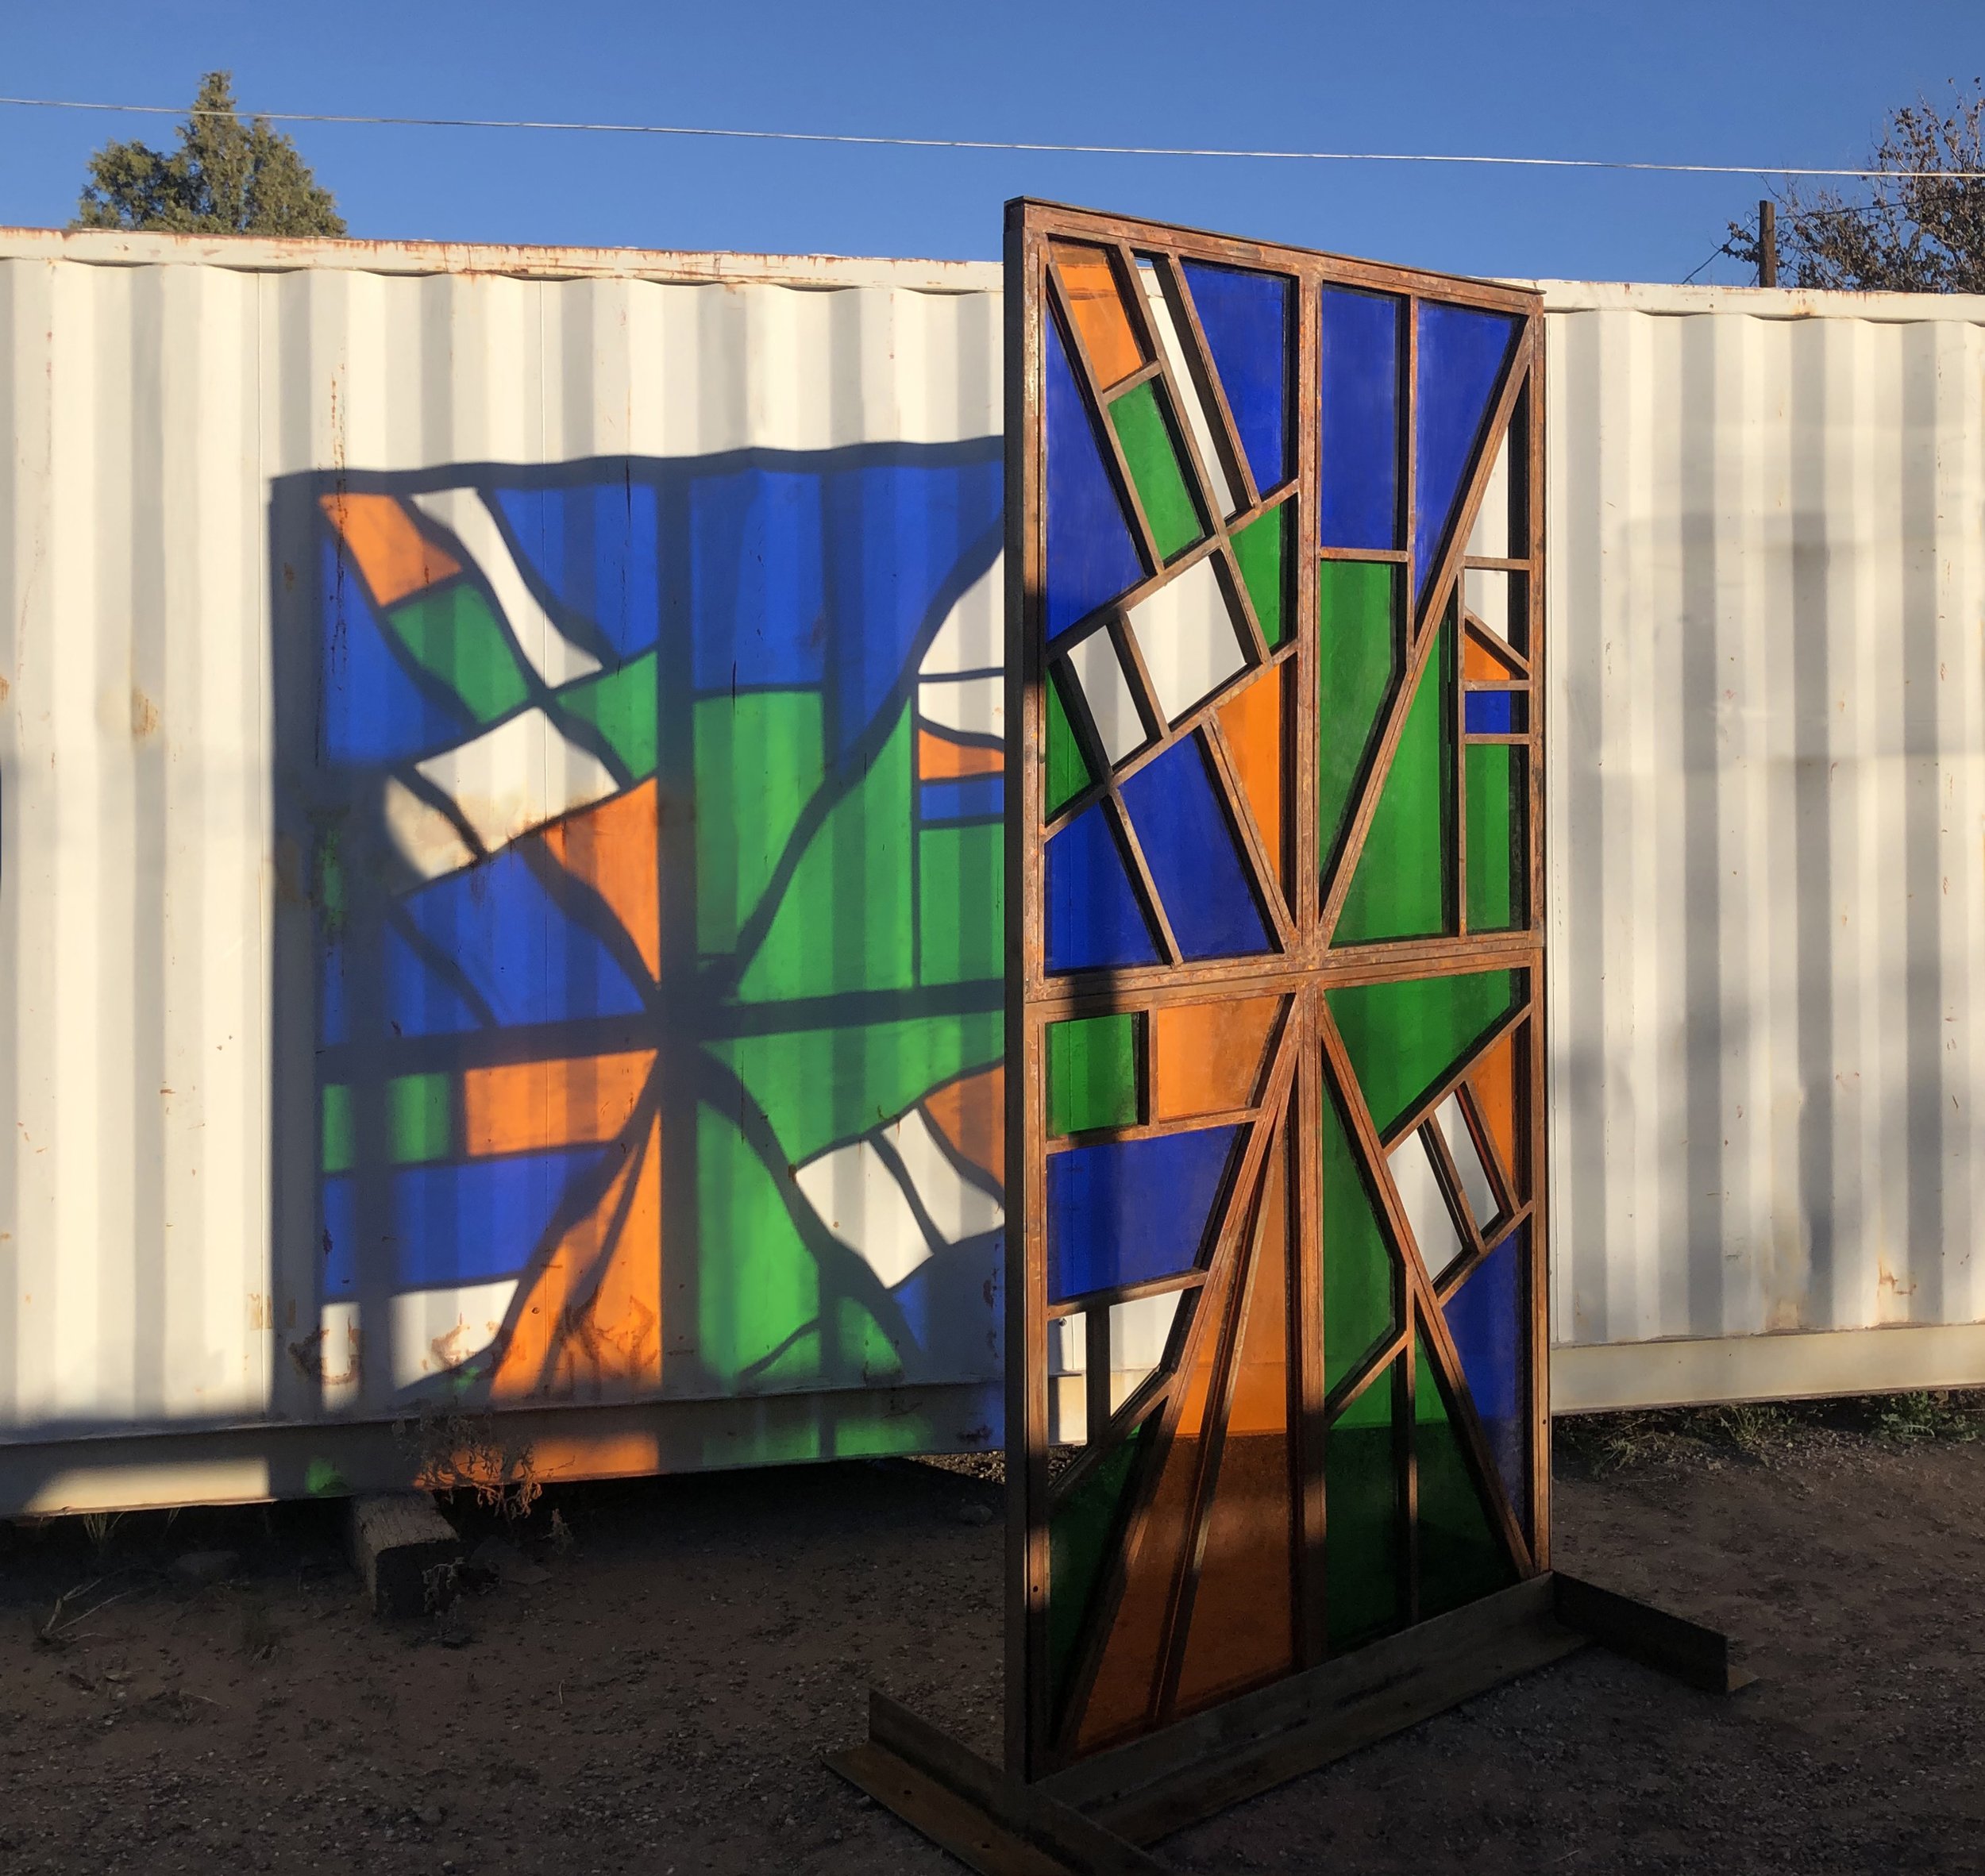  Palm Desert Window, public art commission for El Paseo, Palm Desert, CA. 2020  